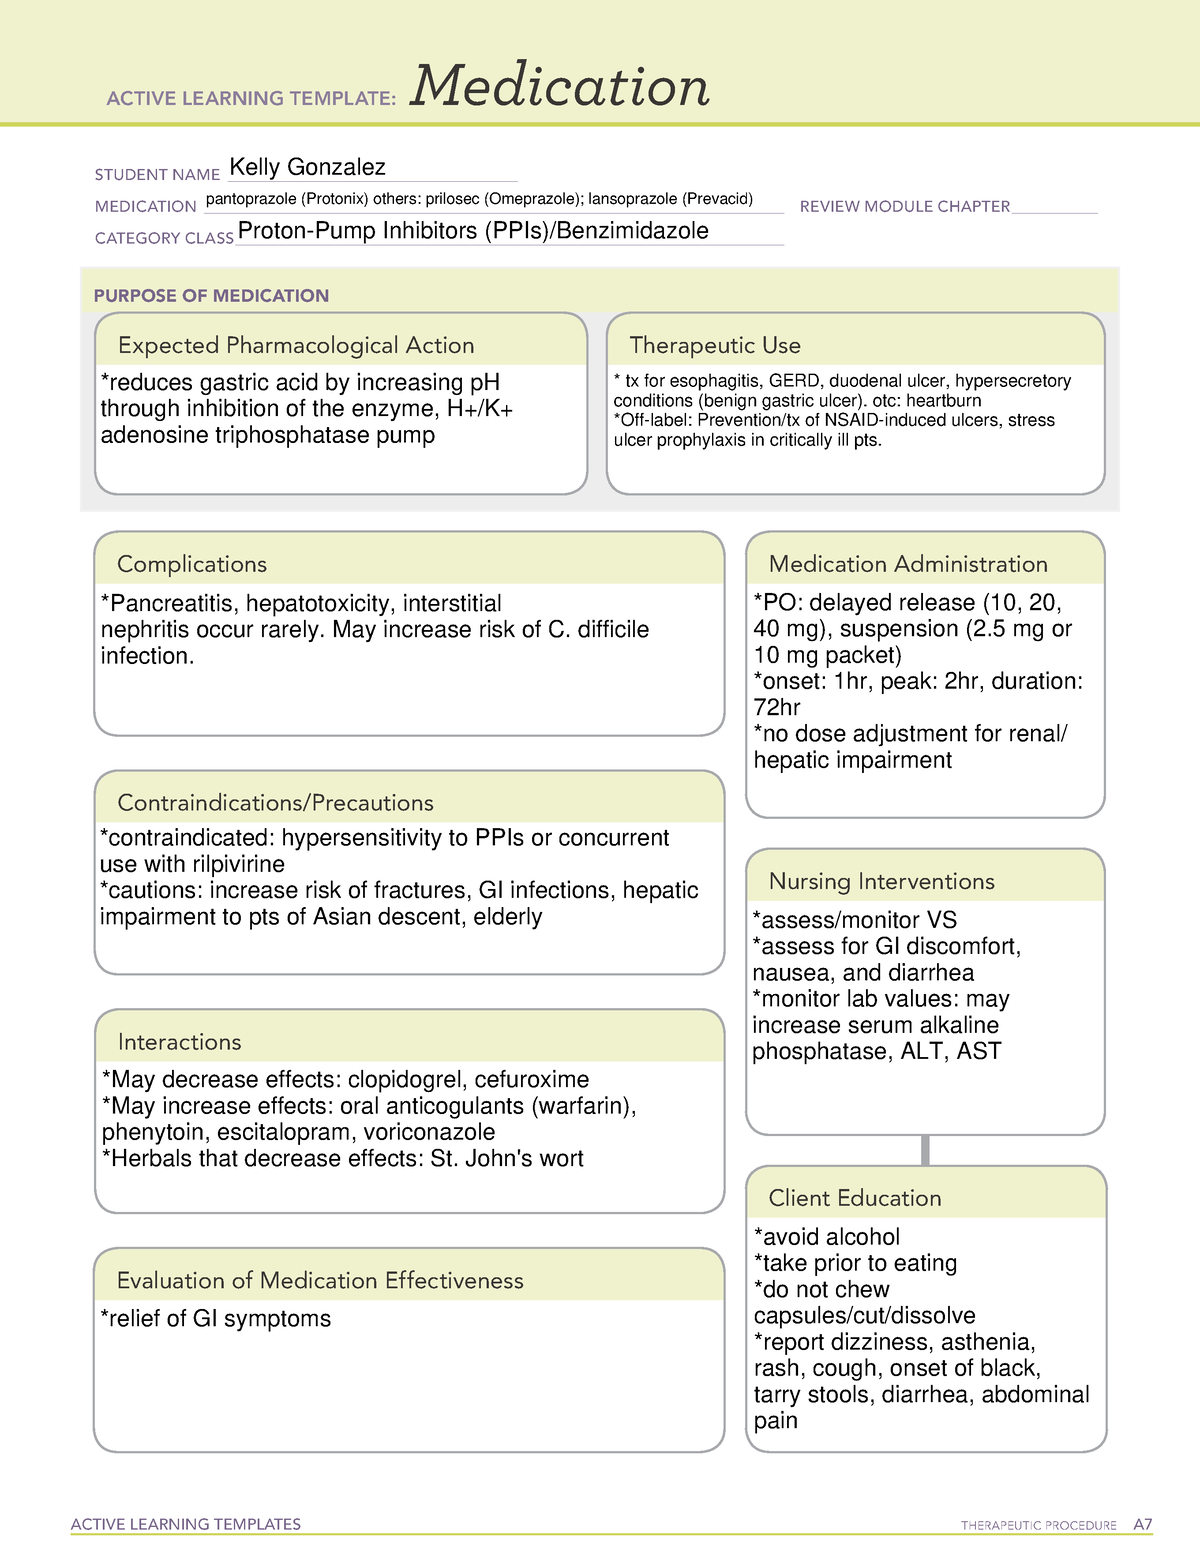 ATI Medication: pantoprazole (Protonix) ACTIVE LEARNING TEMPLATES